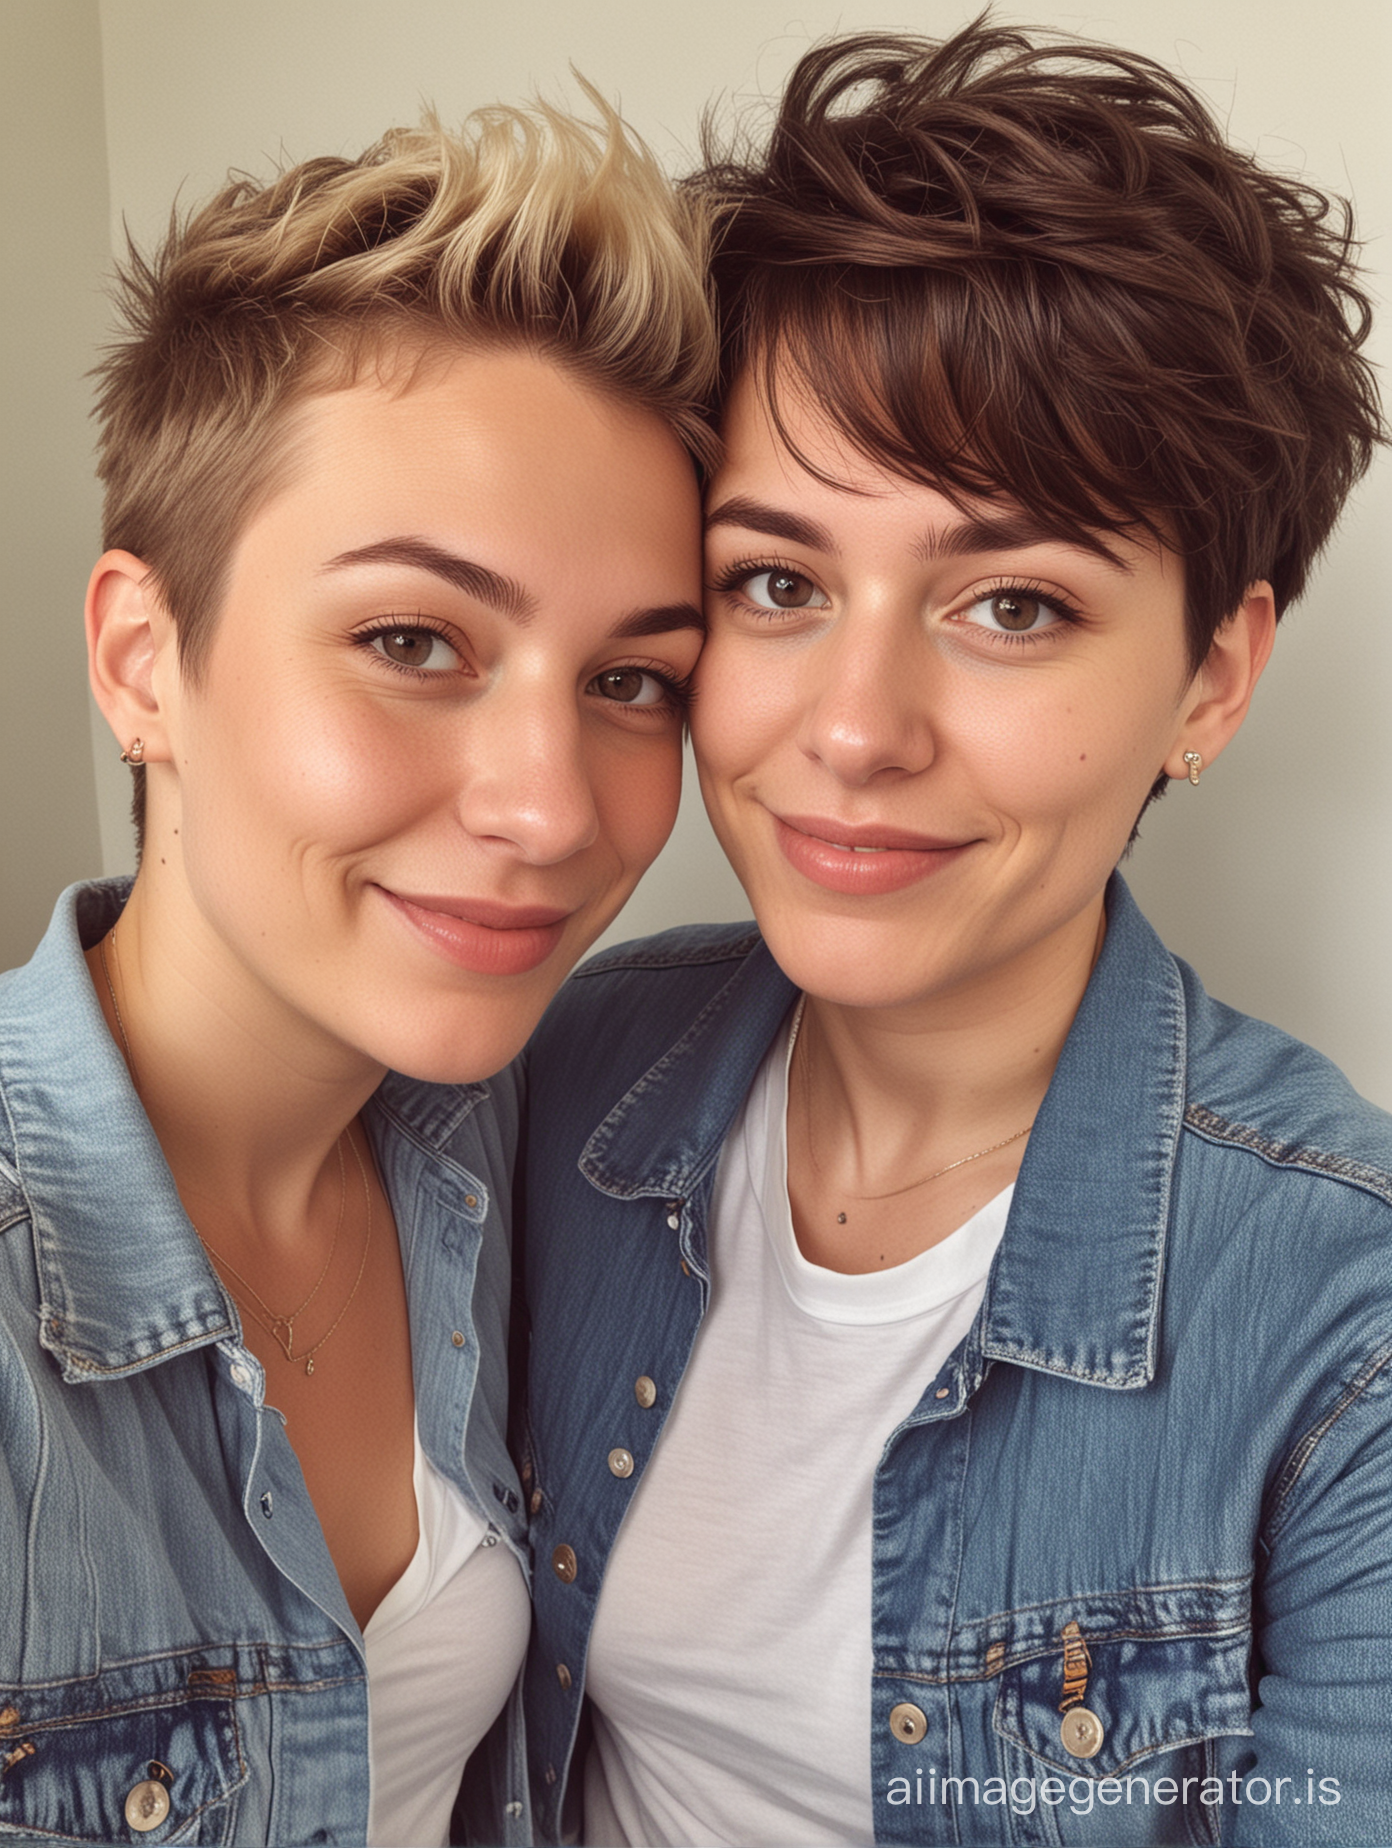 A social media profile pic of a lesbian couple